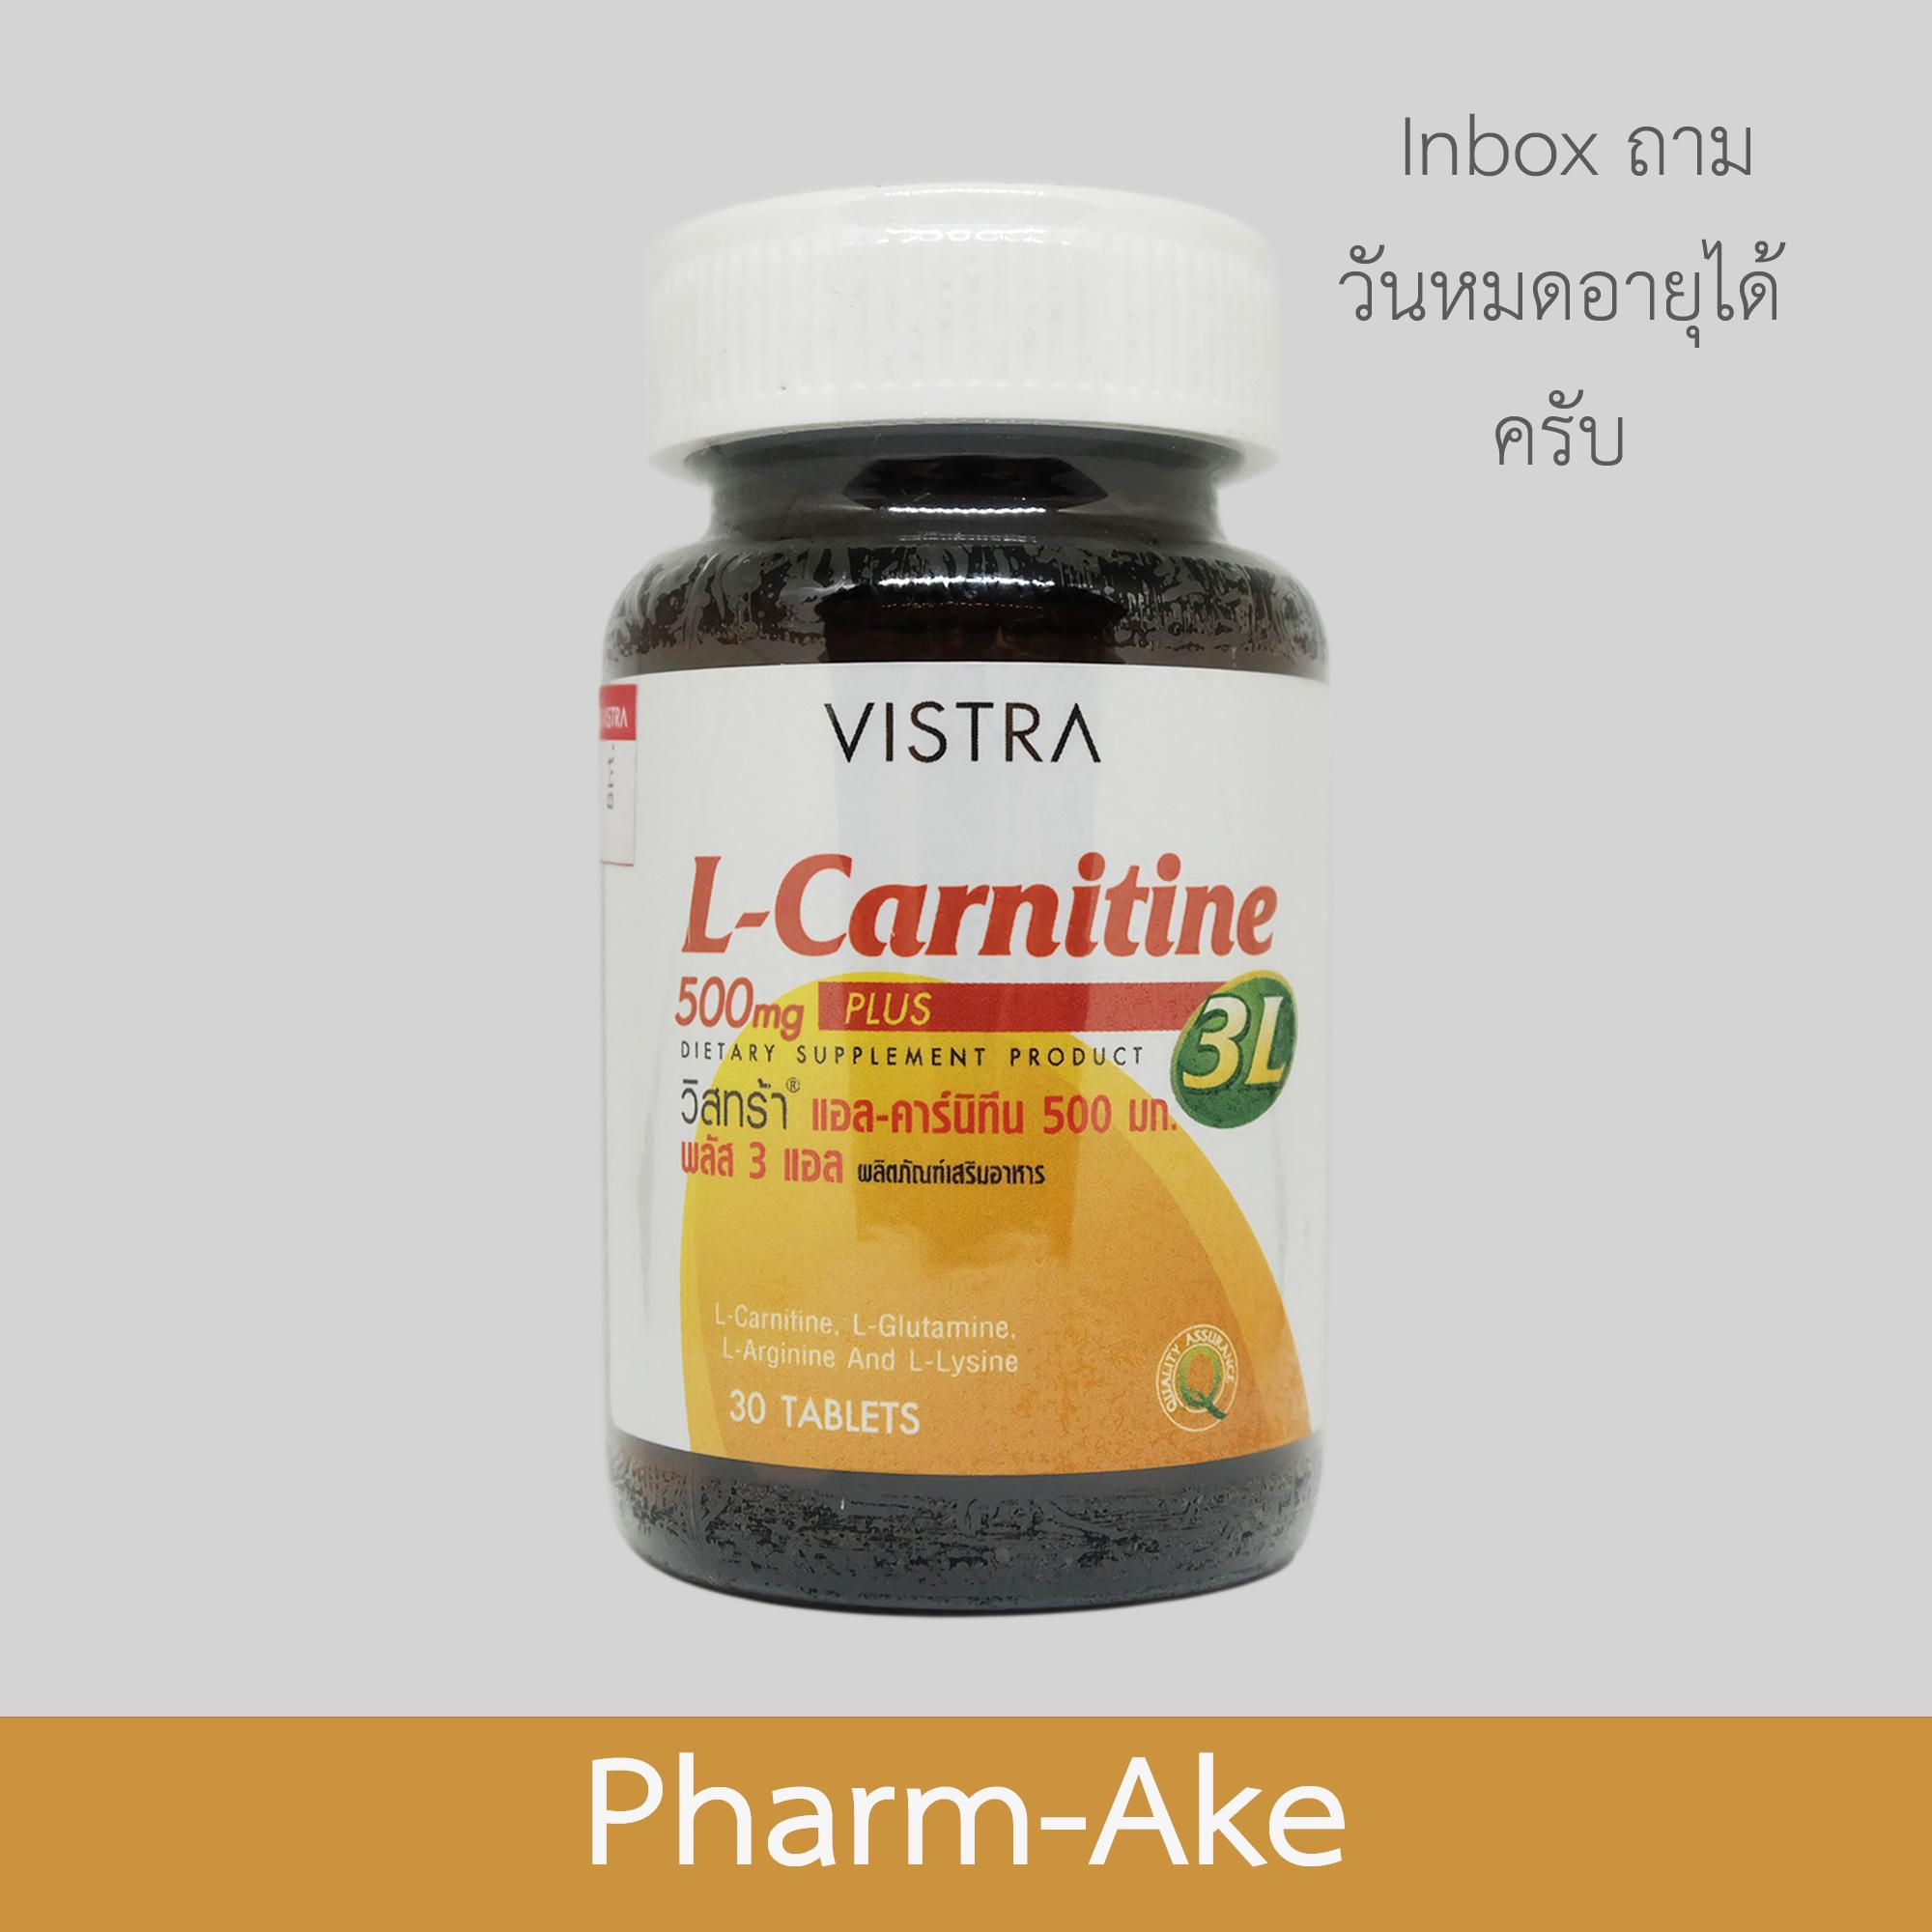 VISTRA L-Carnitine 500 mg PLUS 3L วิสทร้า แอลคาร์นิทีน 30 เม็ด